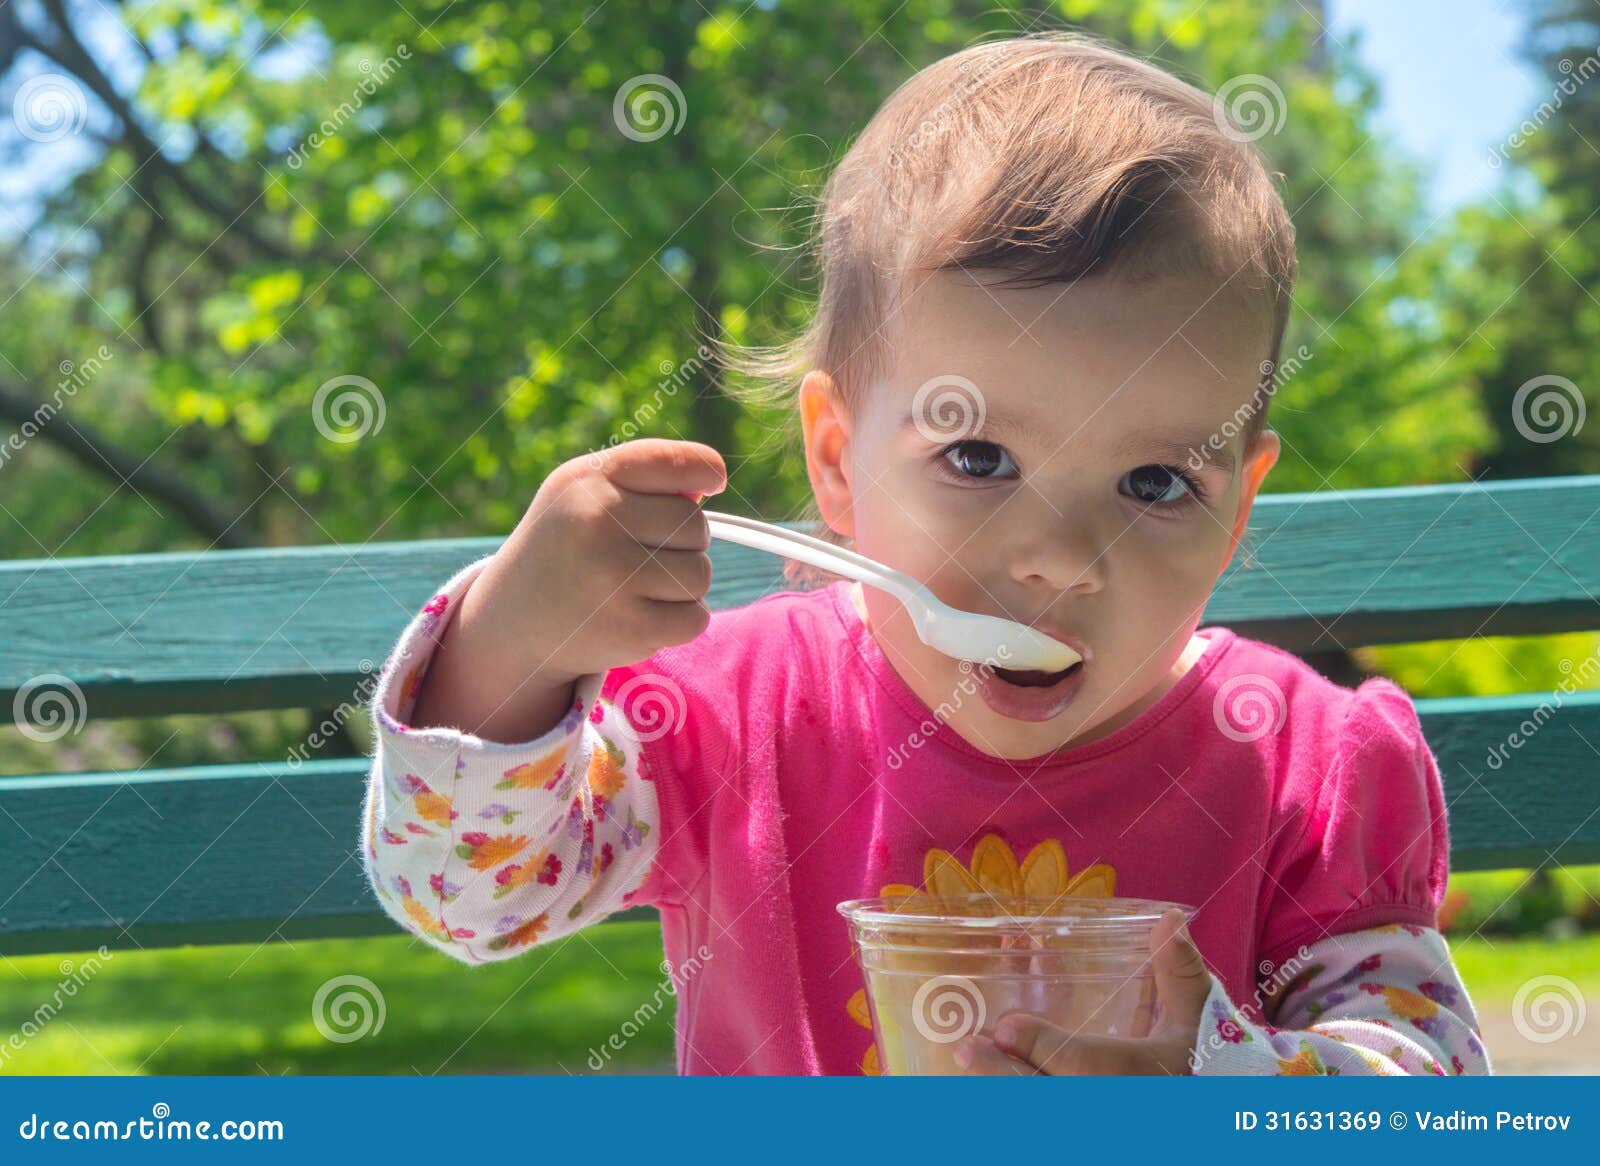 little girl eating ice cream outdoor